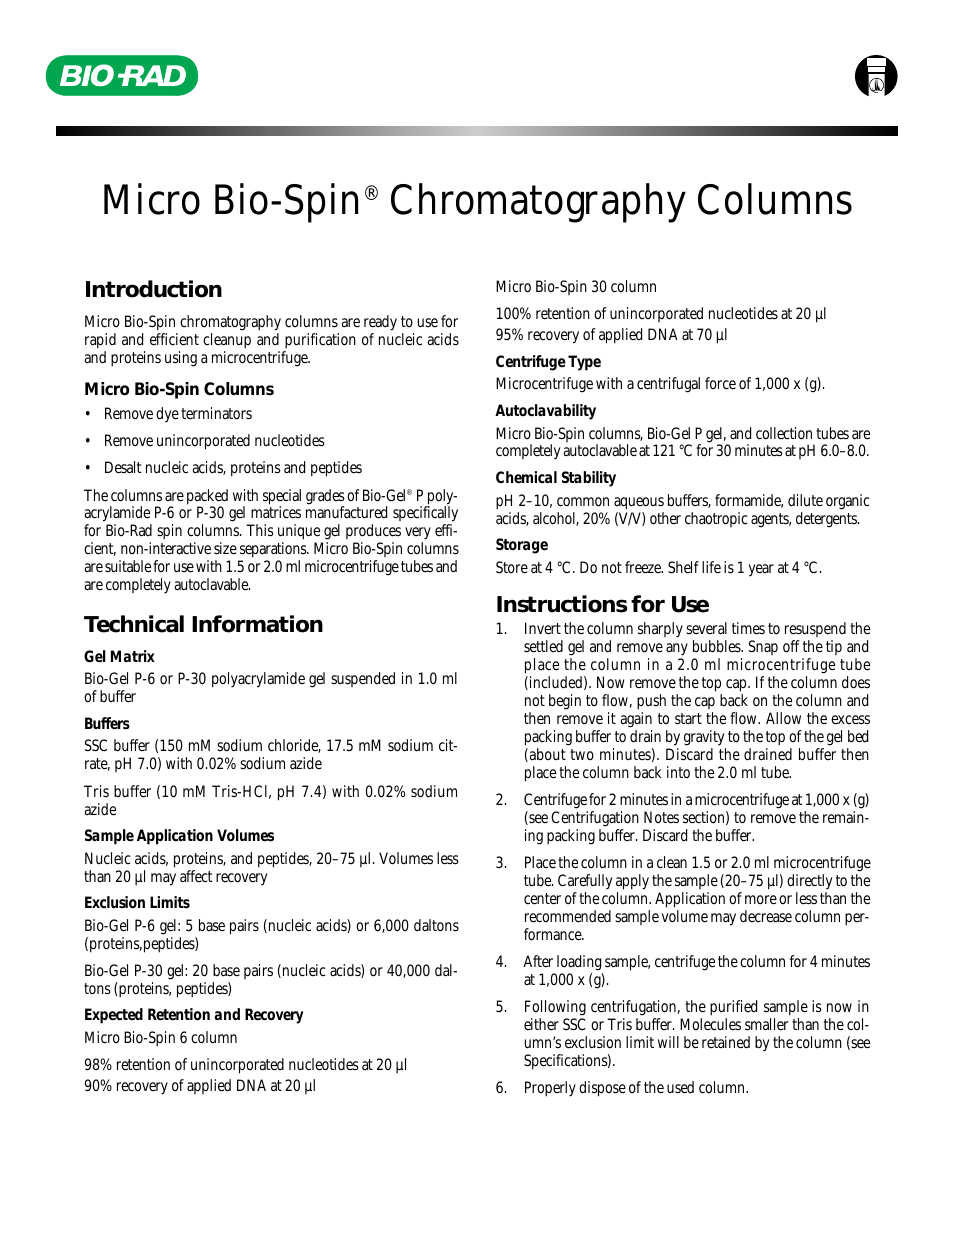 Micro Bio-Spin® Columns with Bio-Gel® P-30